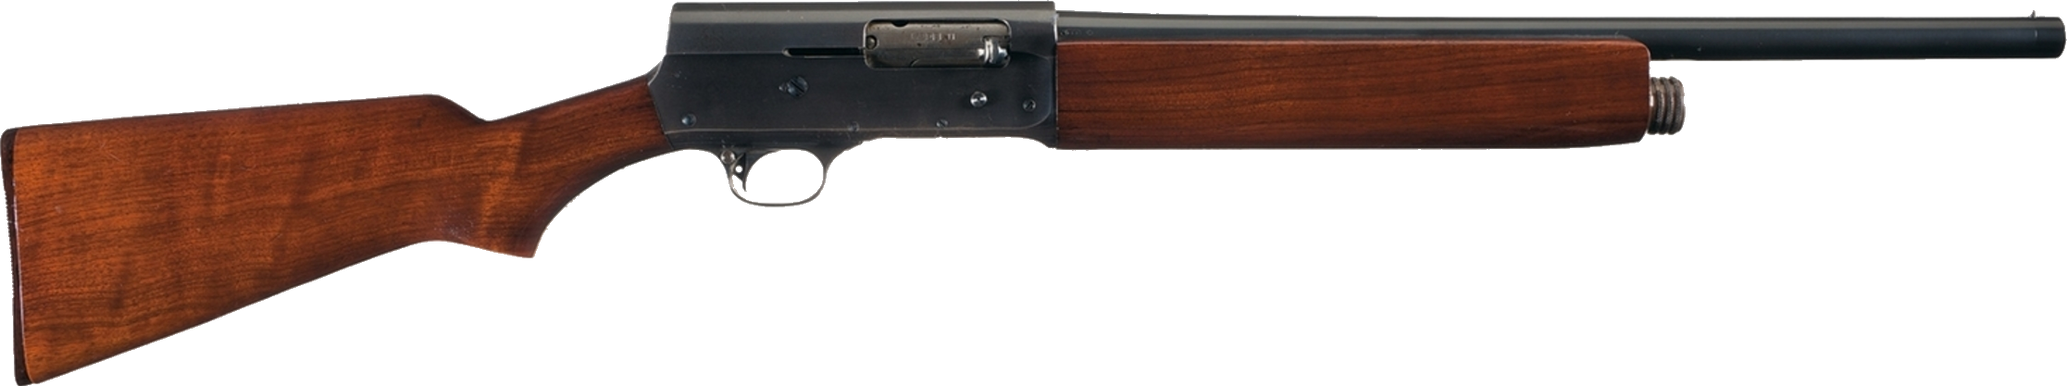 Remington Model 11 in Riot Gun Blank Meme Template